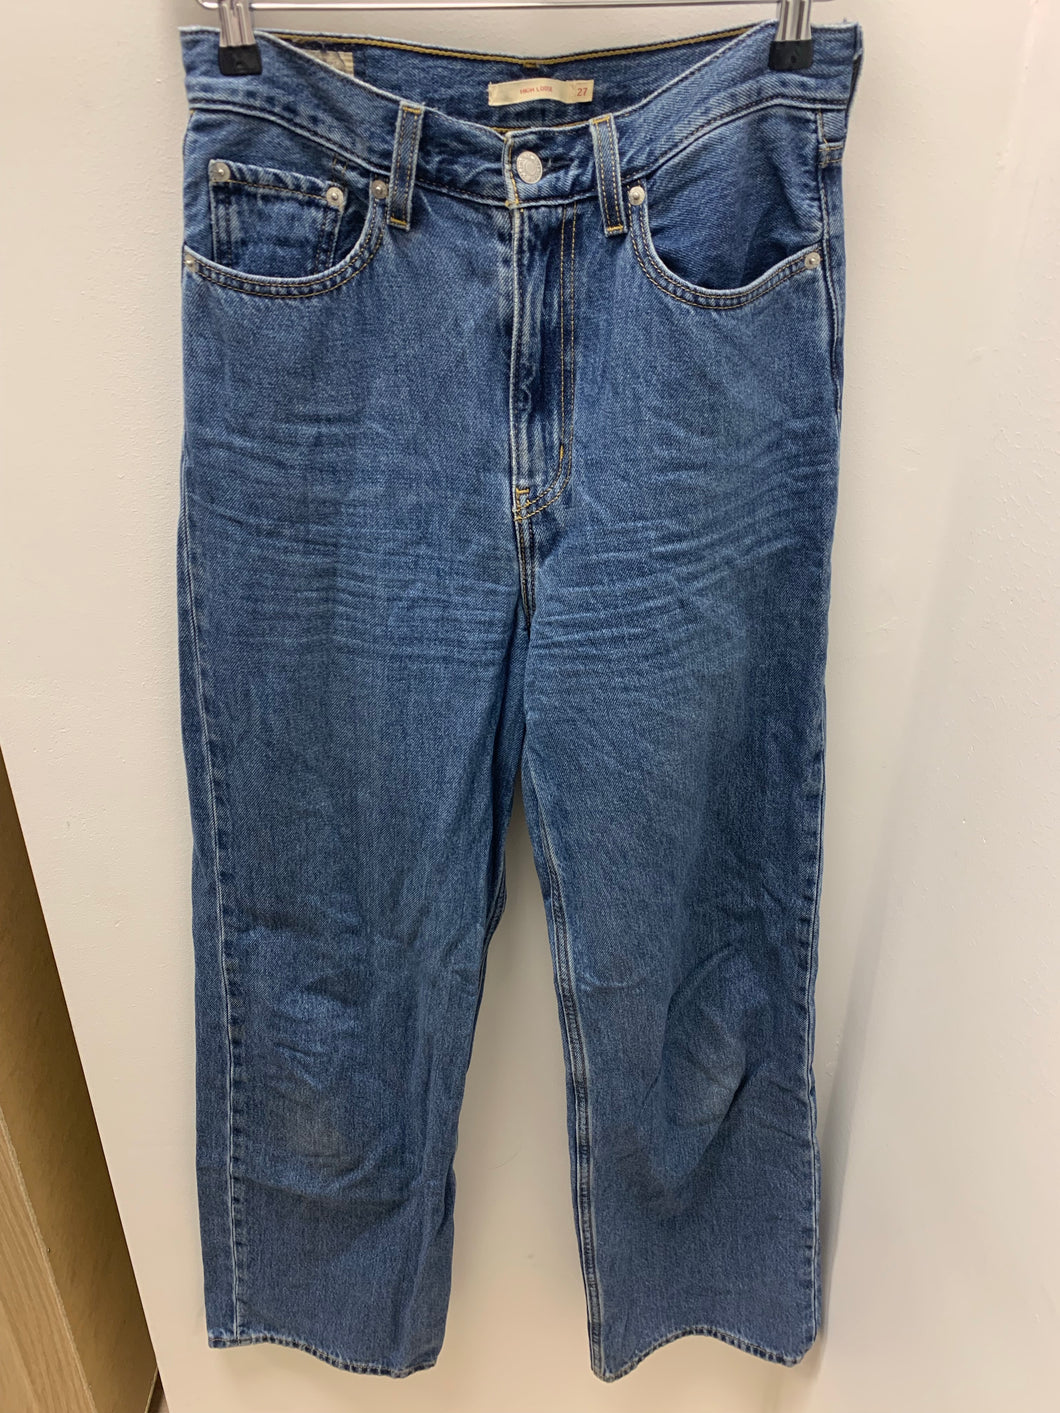 Dam Levi’s Jeans storlek 27